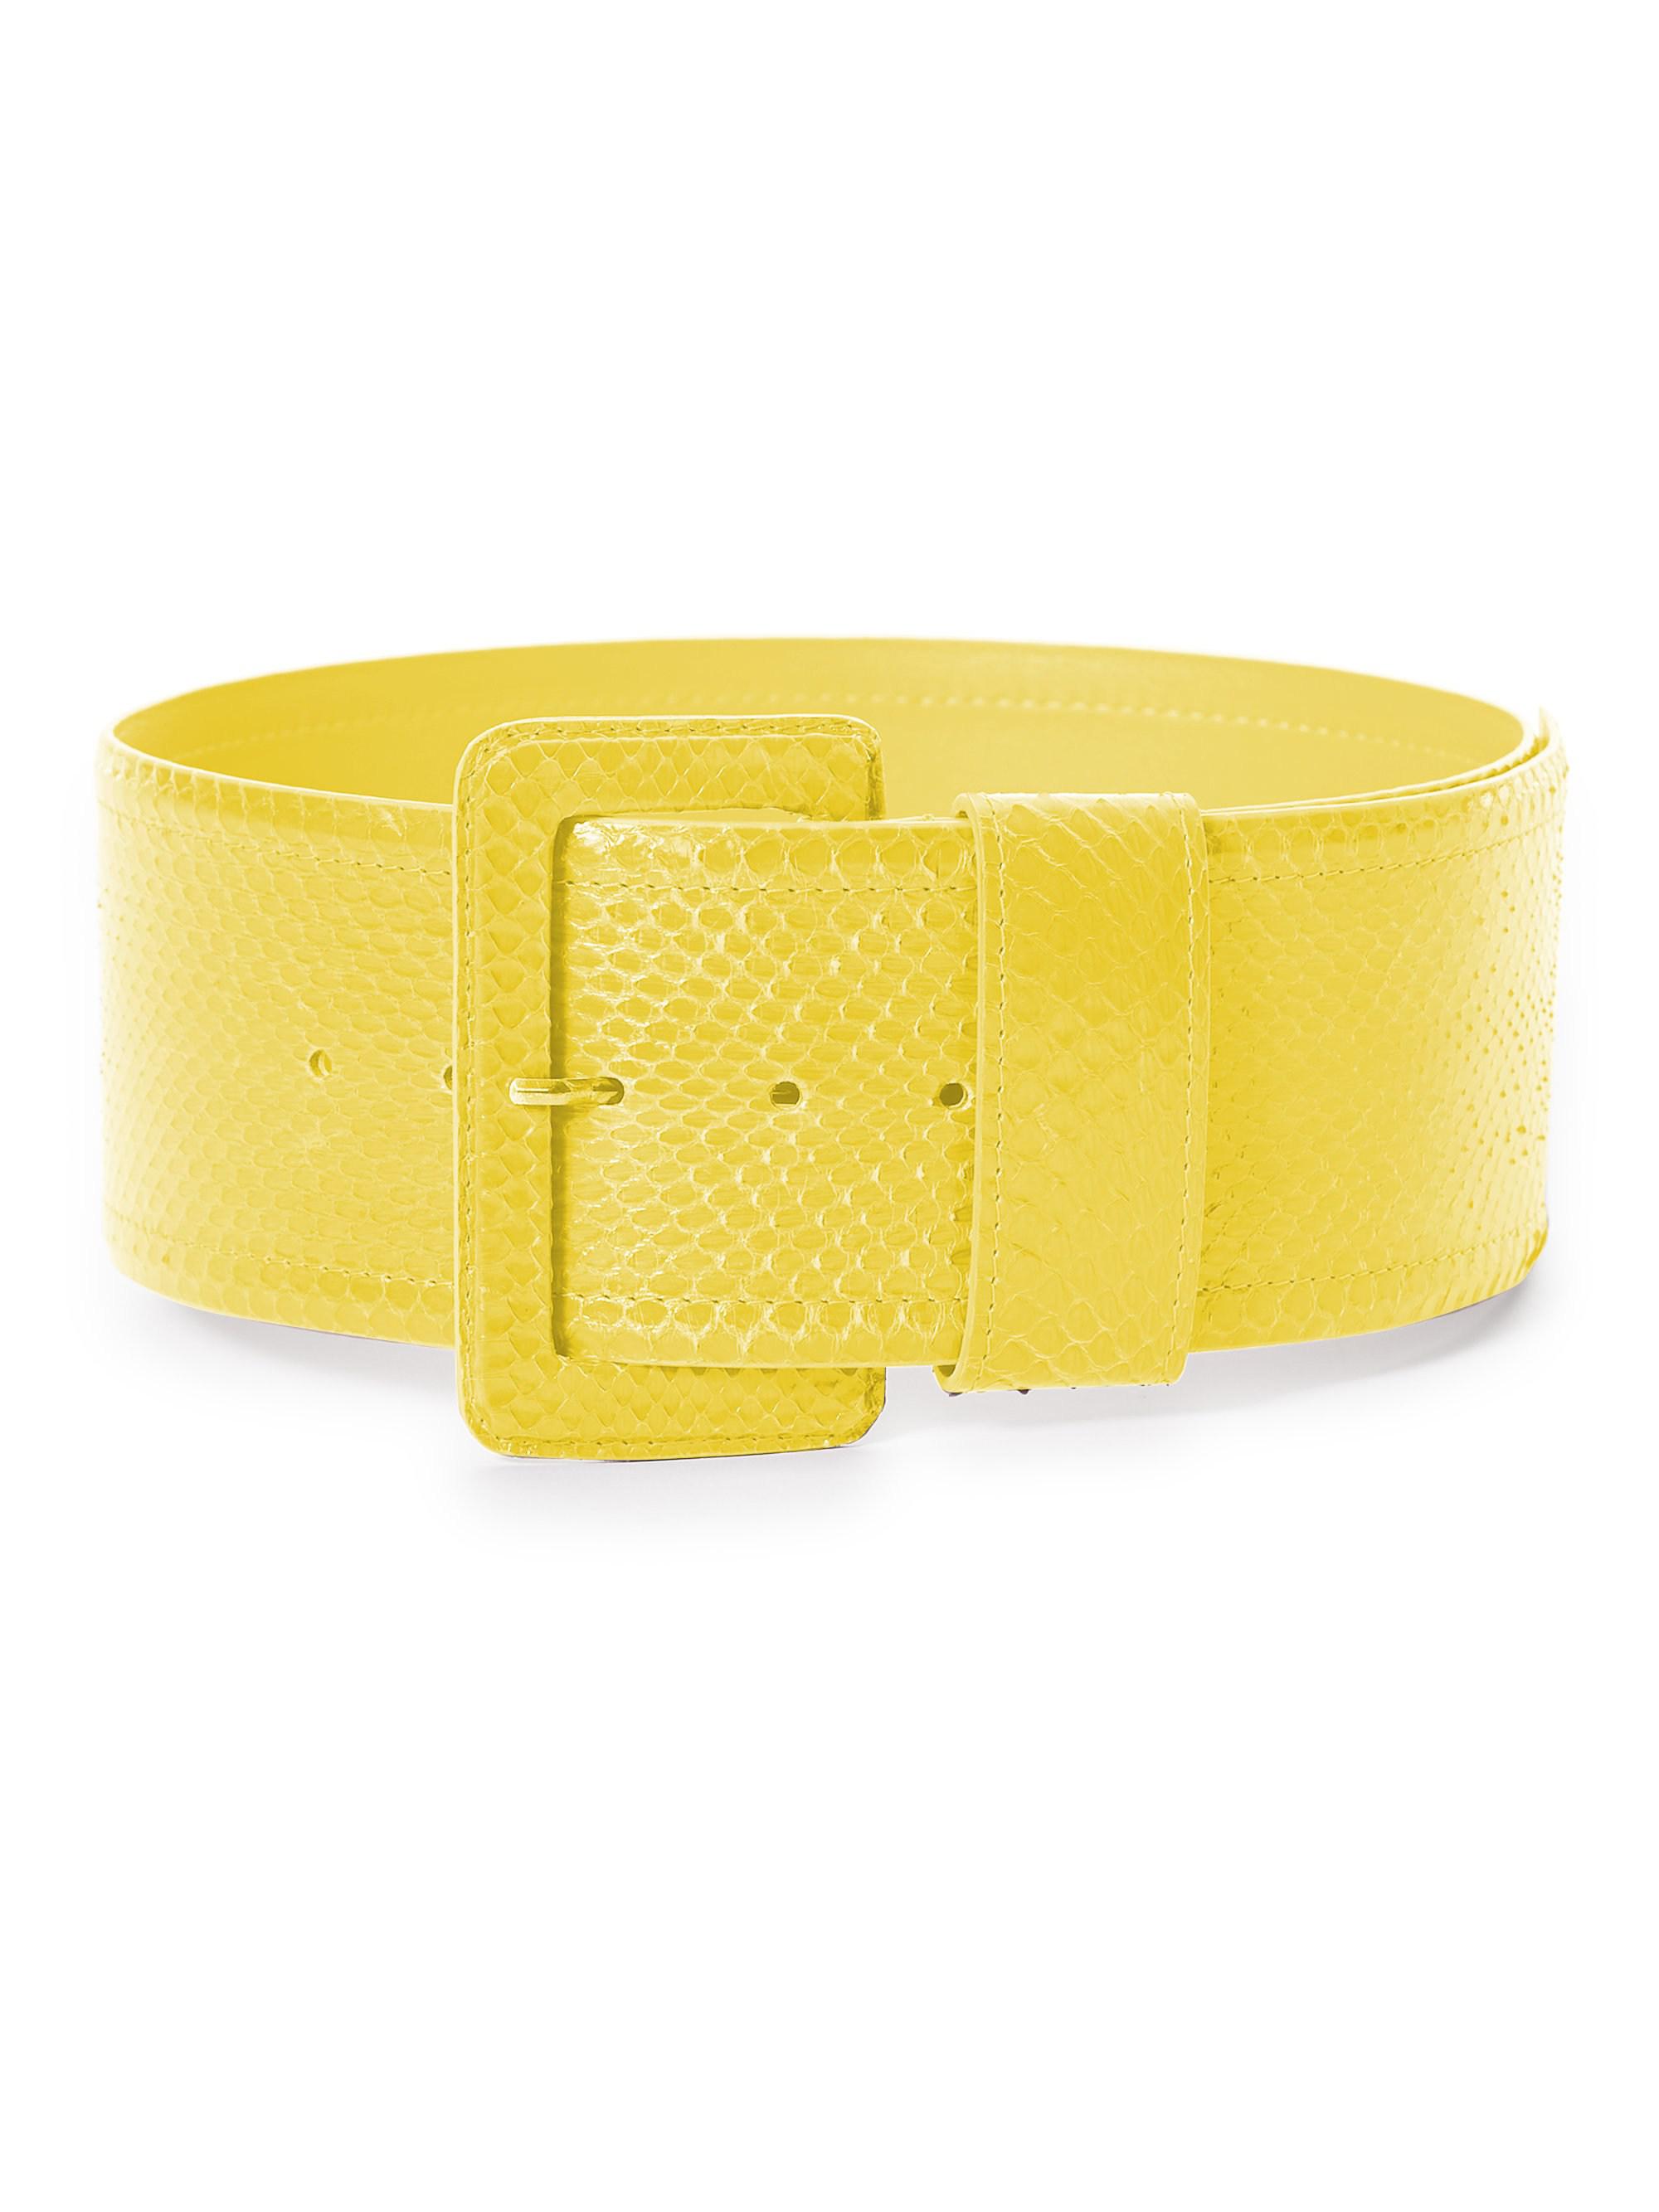 Carolina Herrera Leather Wide Watersnake Belt in Yellow - Lyst